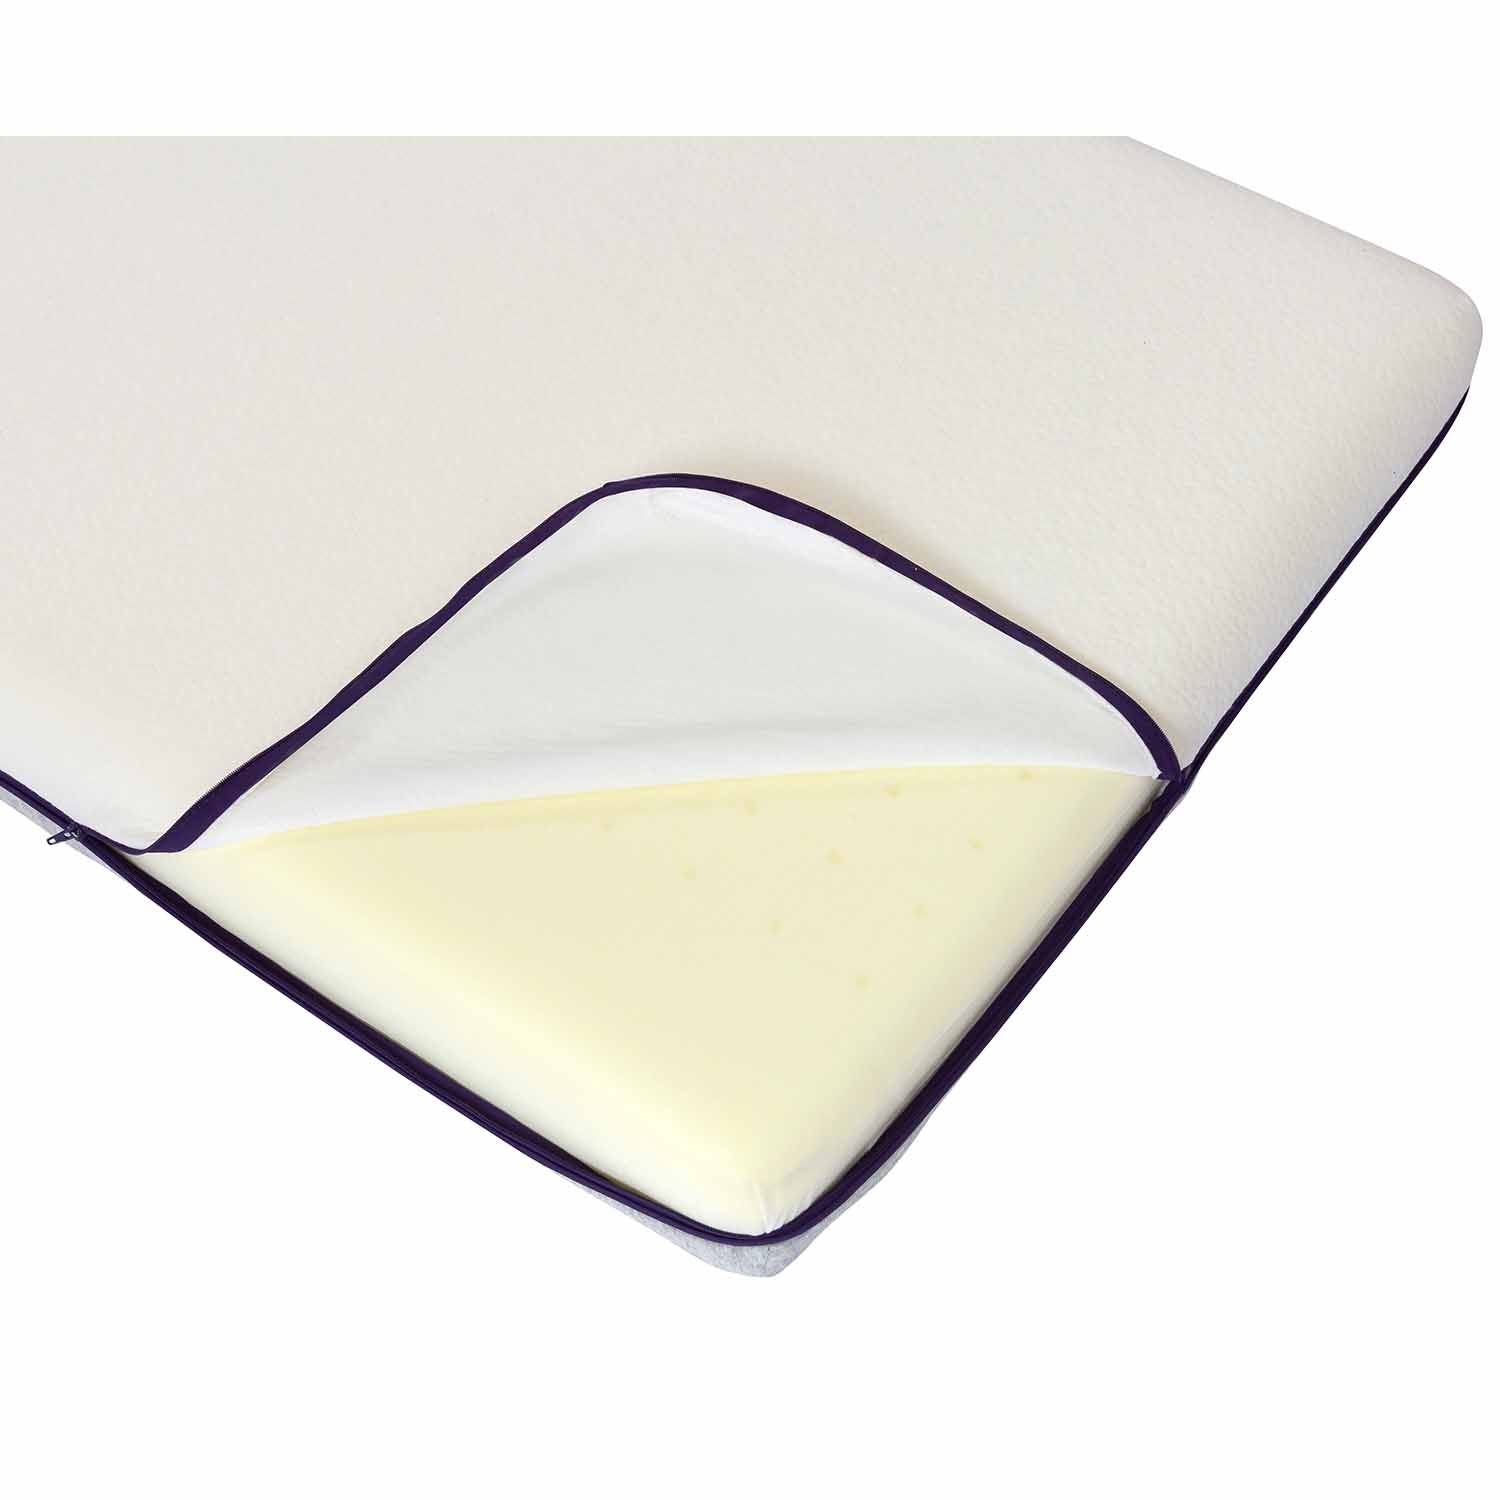 Premium ClevaFoam® matras | ledikant & peuter bed